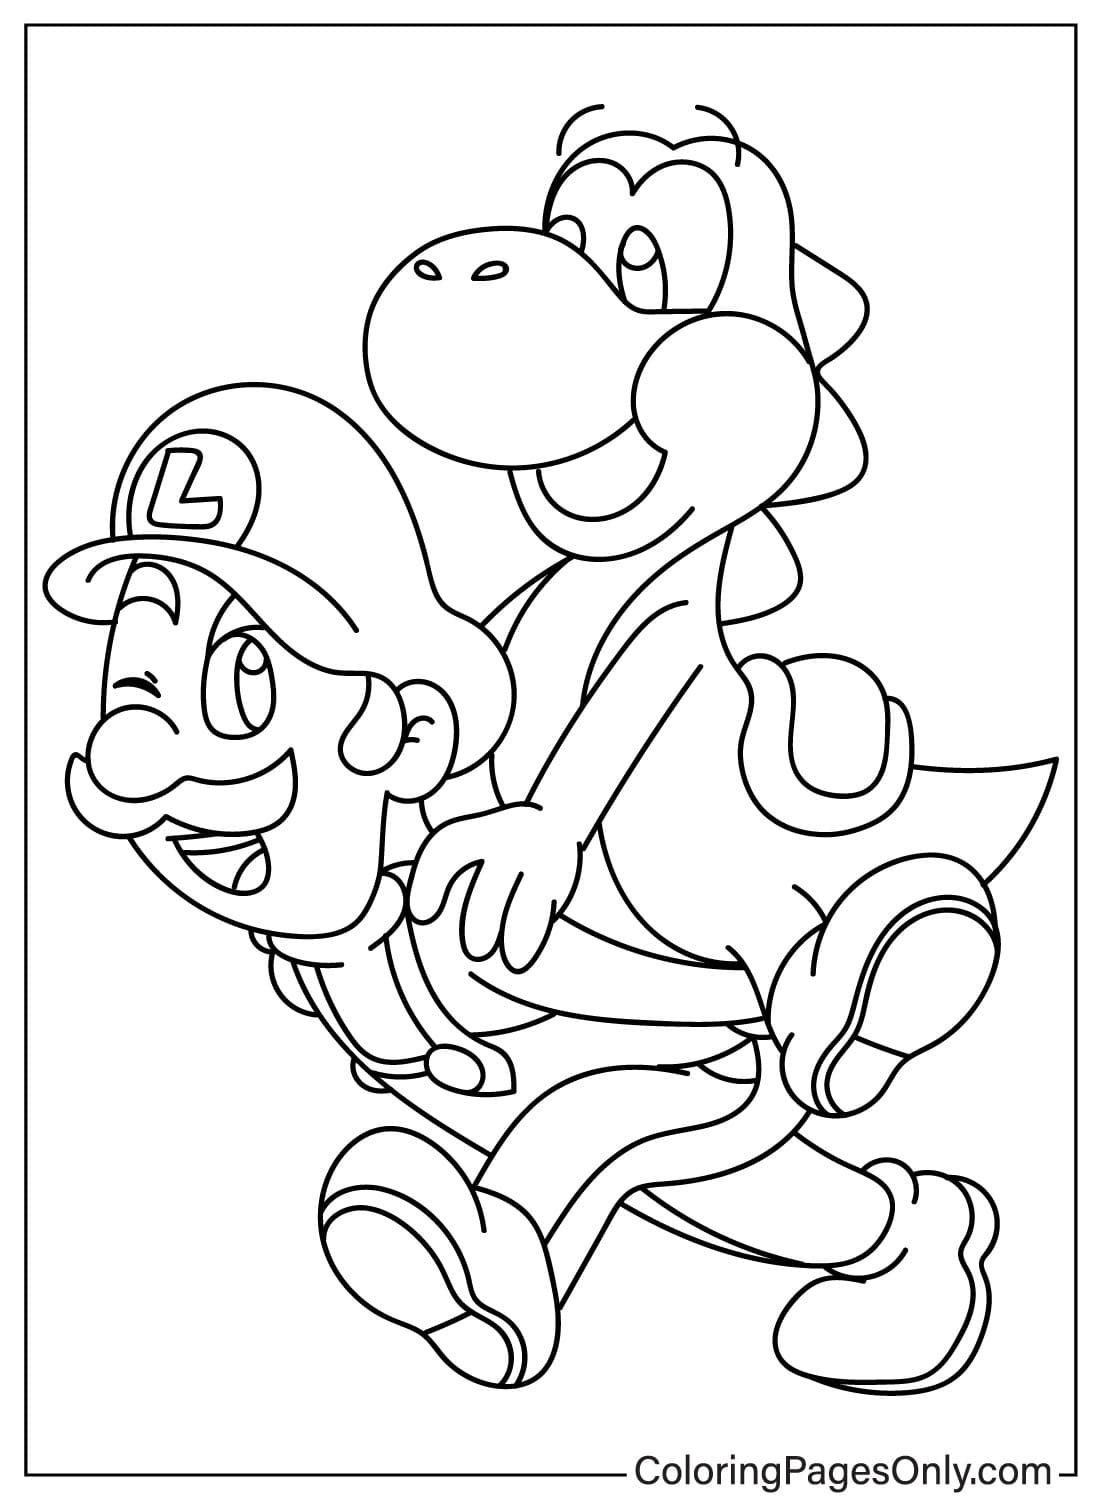 Luigi and Yoshi Coloring Page